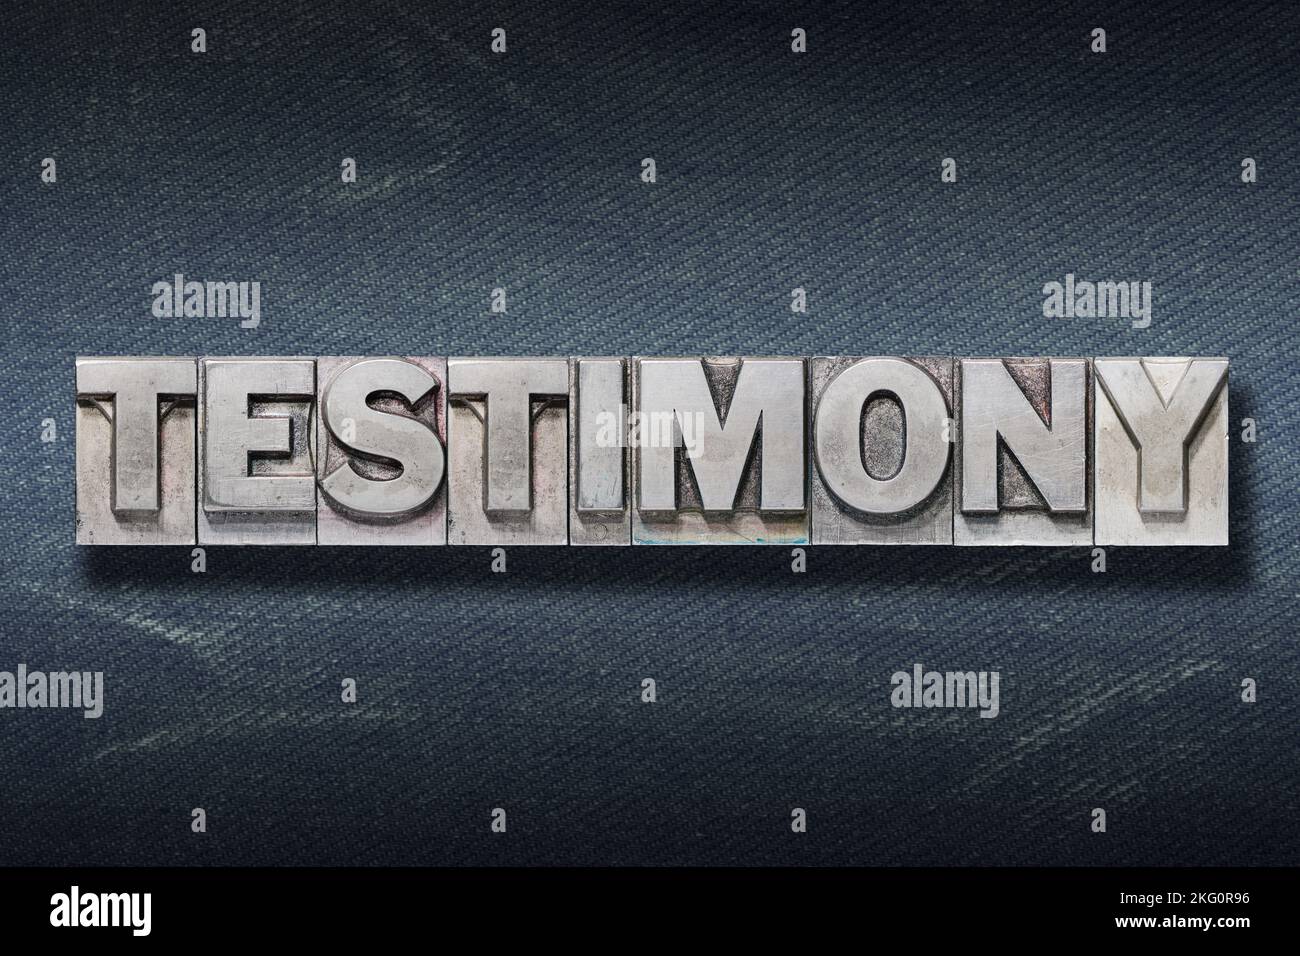 testimony word made from metallic letterpress on dark jeans background Stock Photo